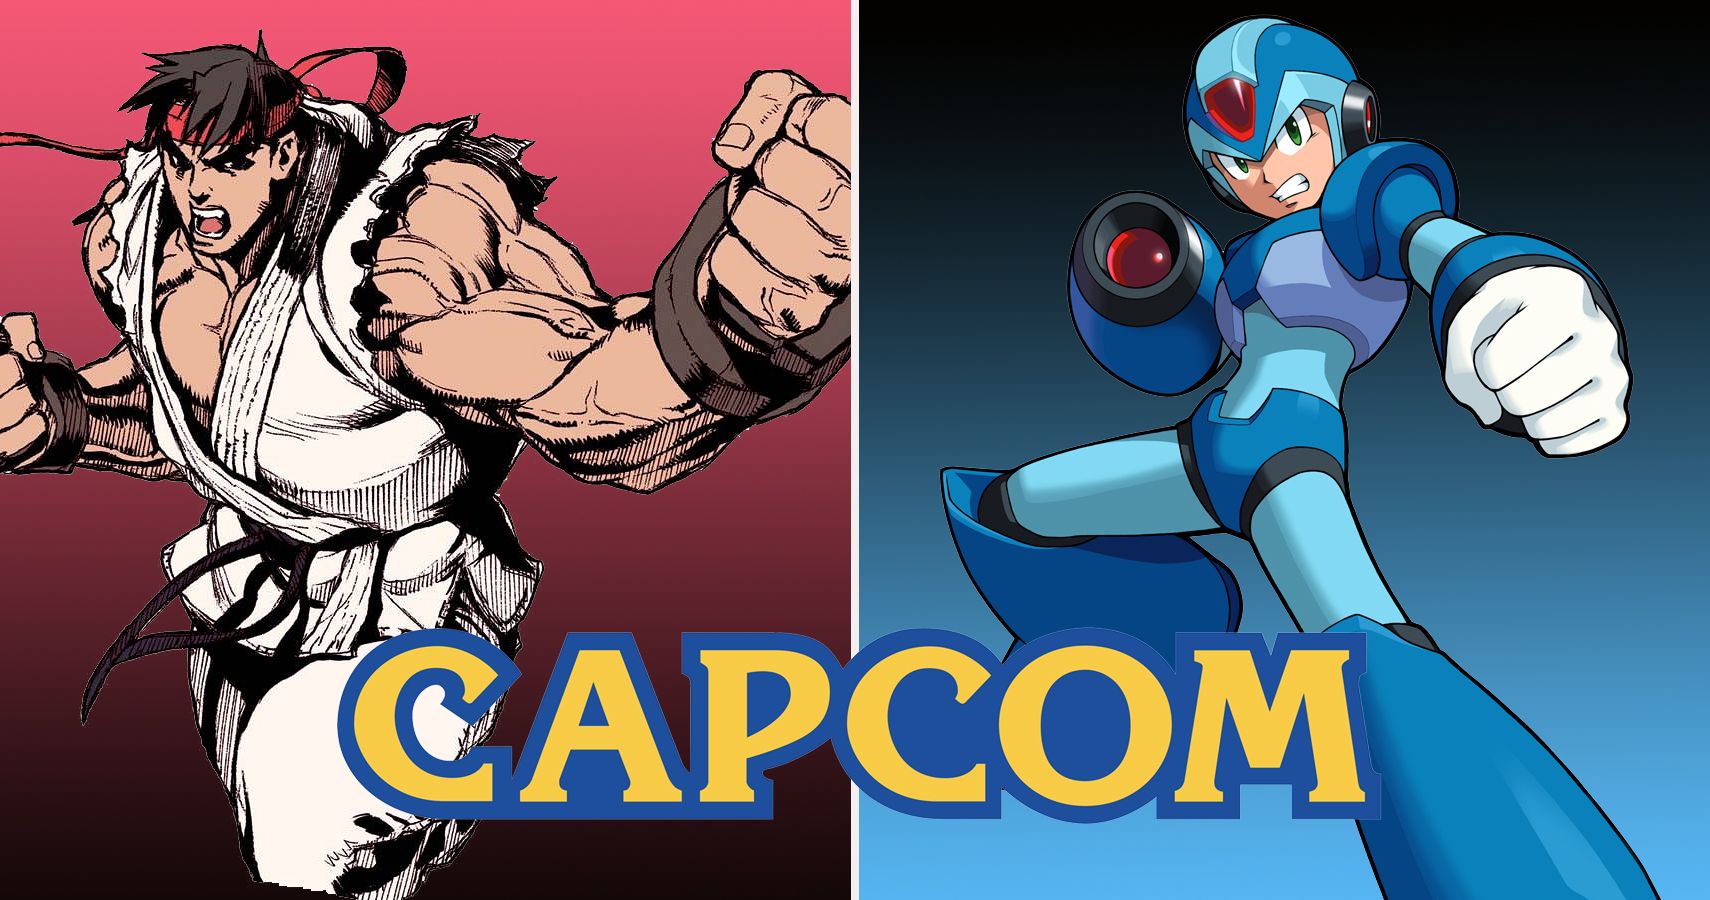 Play classic Capcom games including Street Fighter 2 and Mega Man